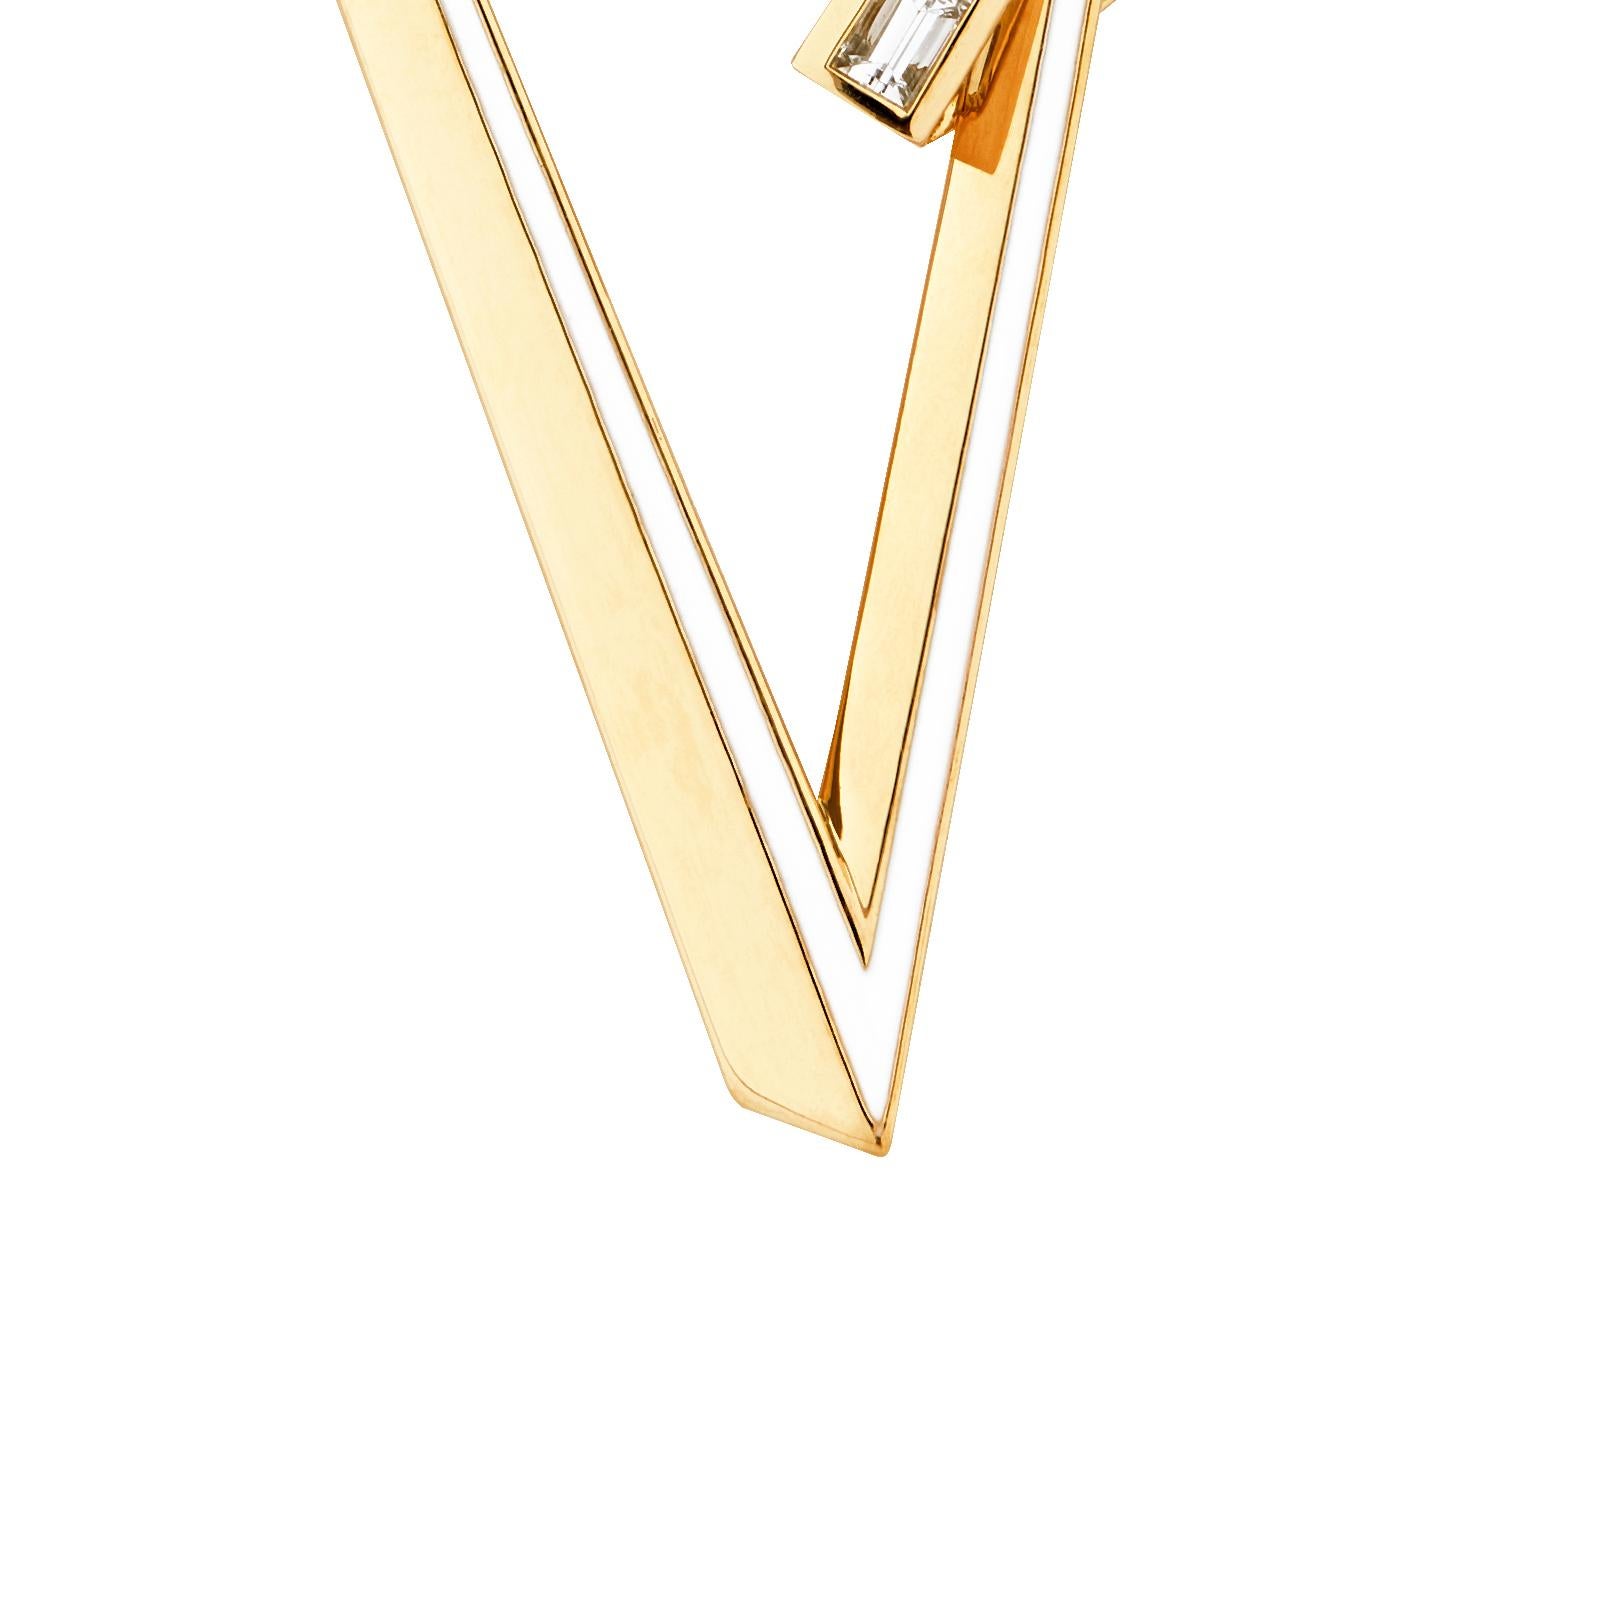 Baguette Cut Stephen Webster Vertigo Very Obtuse 18 Karat Gold and White Diamond Necklace